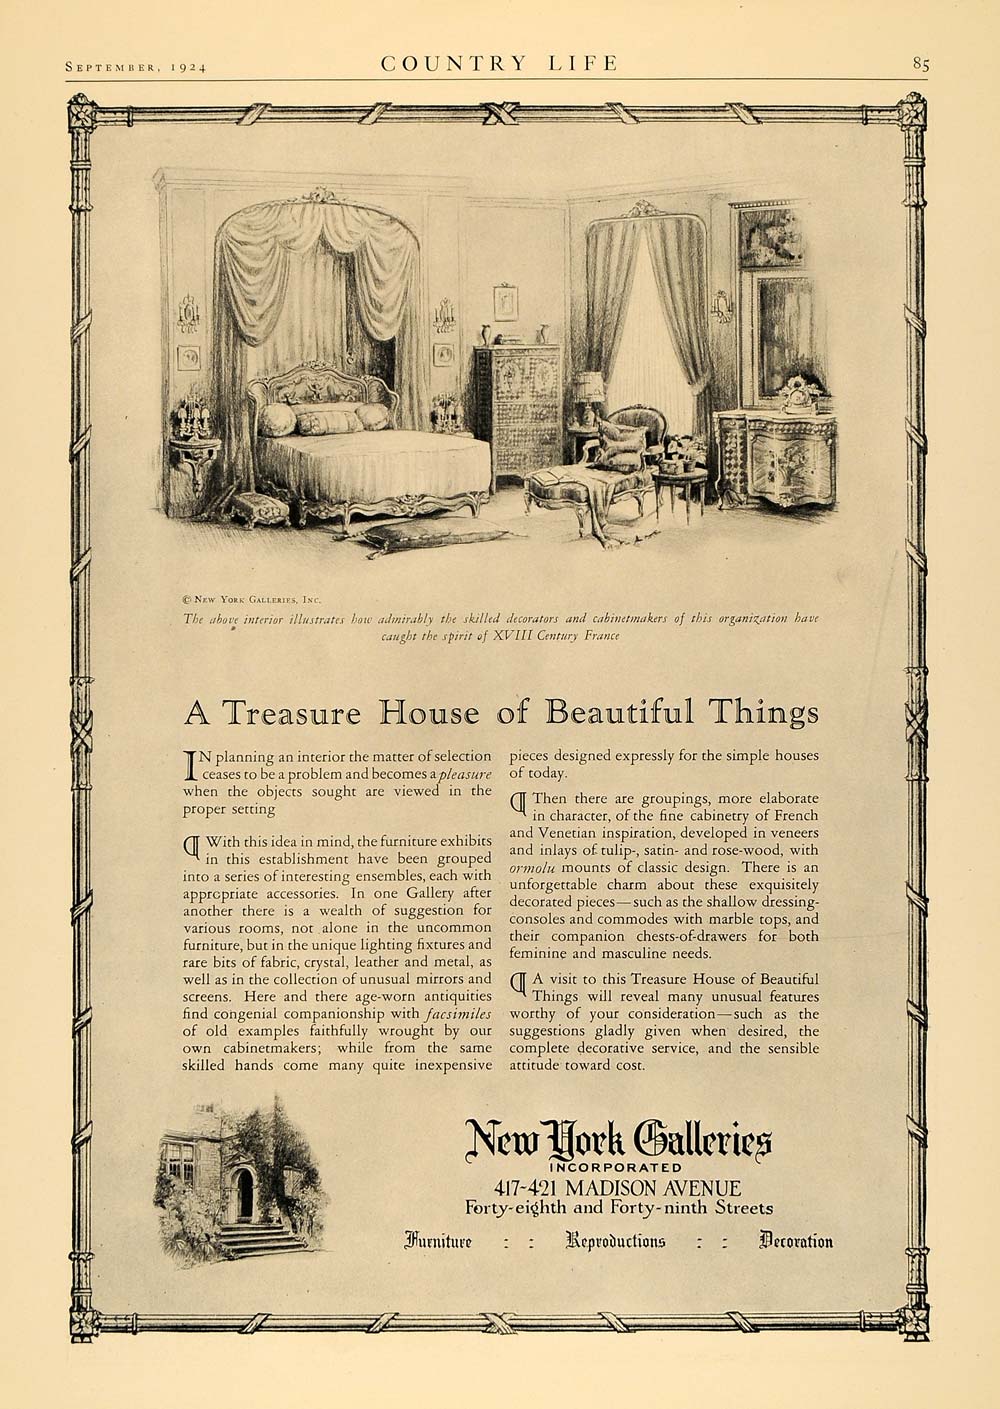 1924 Ad New York Galleries XVIII Century France Decor - ORIGINAL ADVERTISING CL6